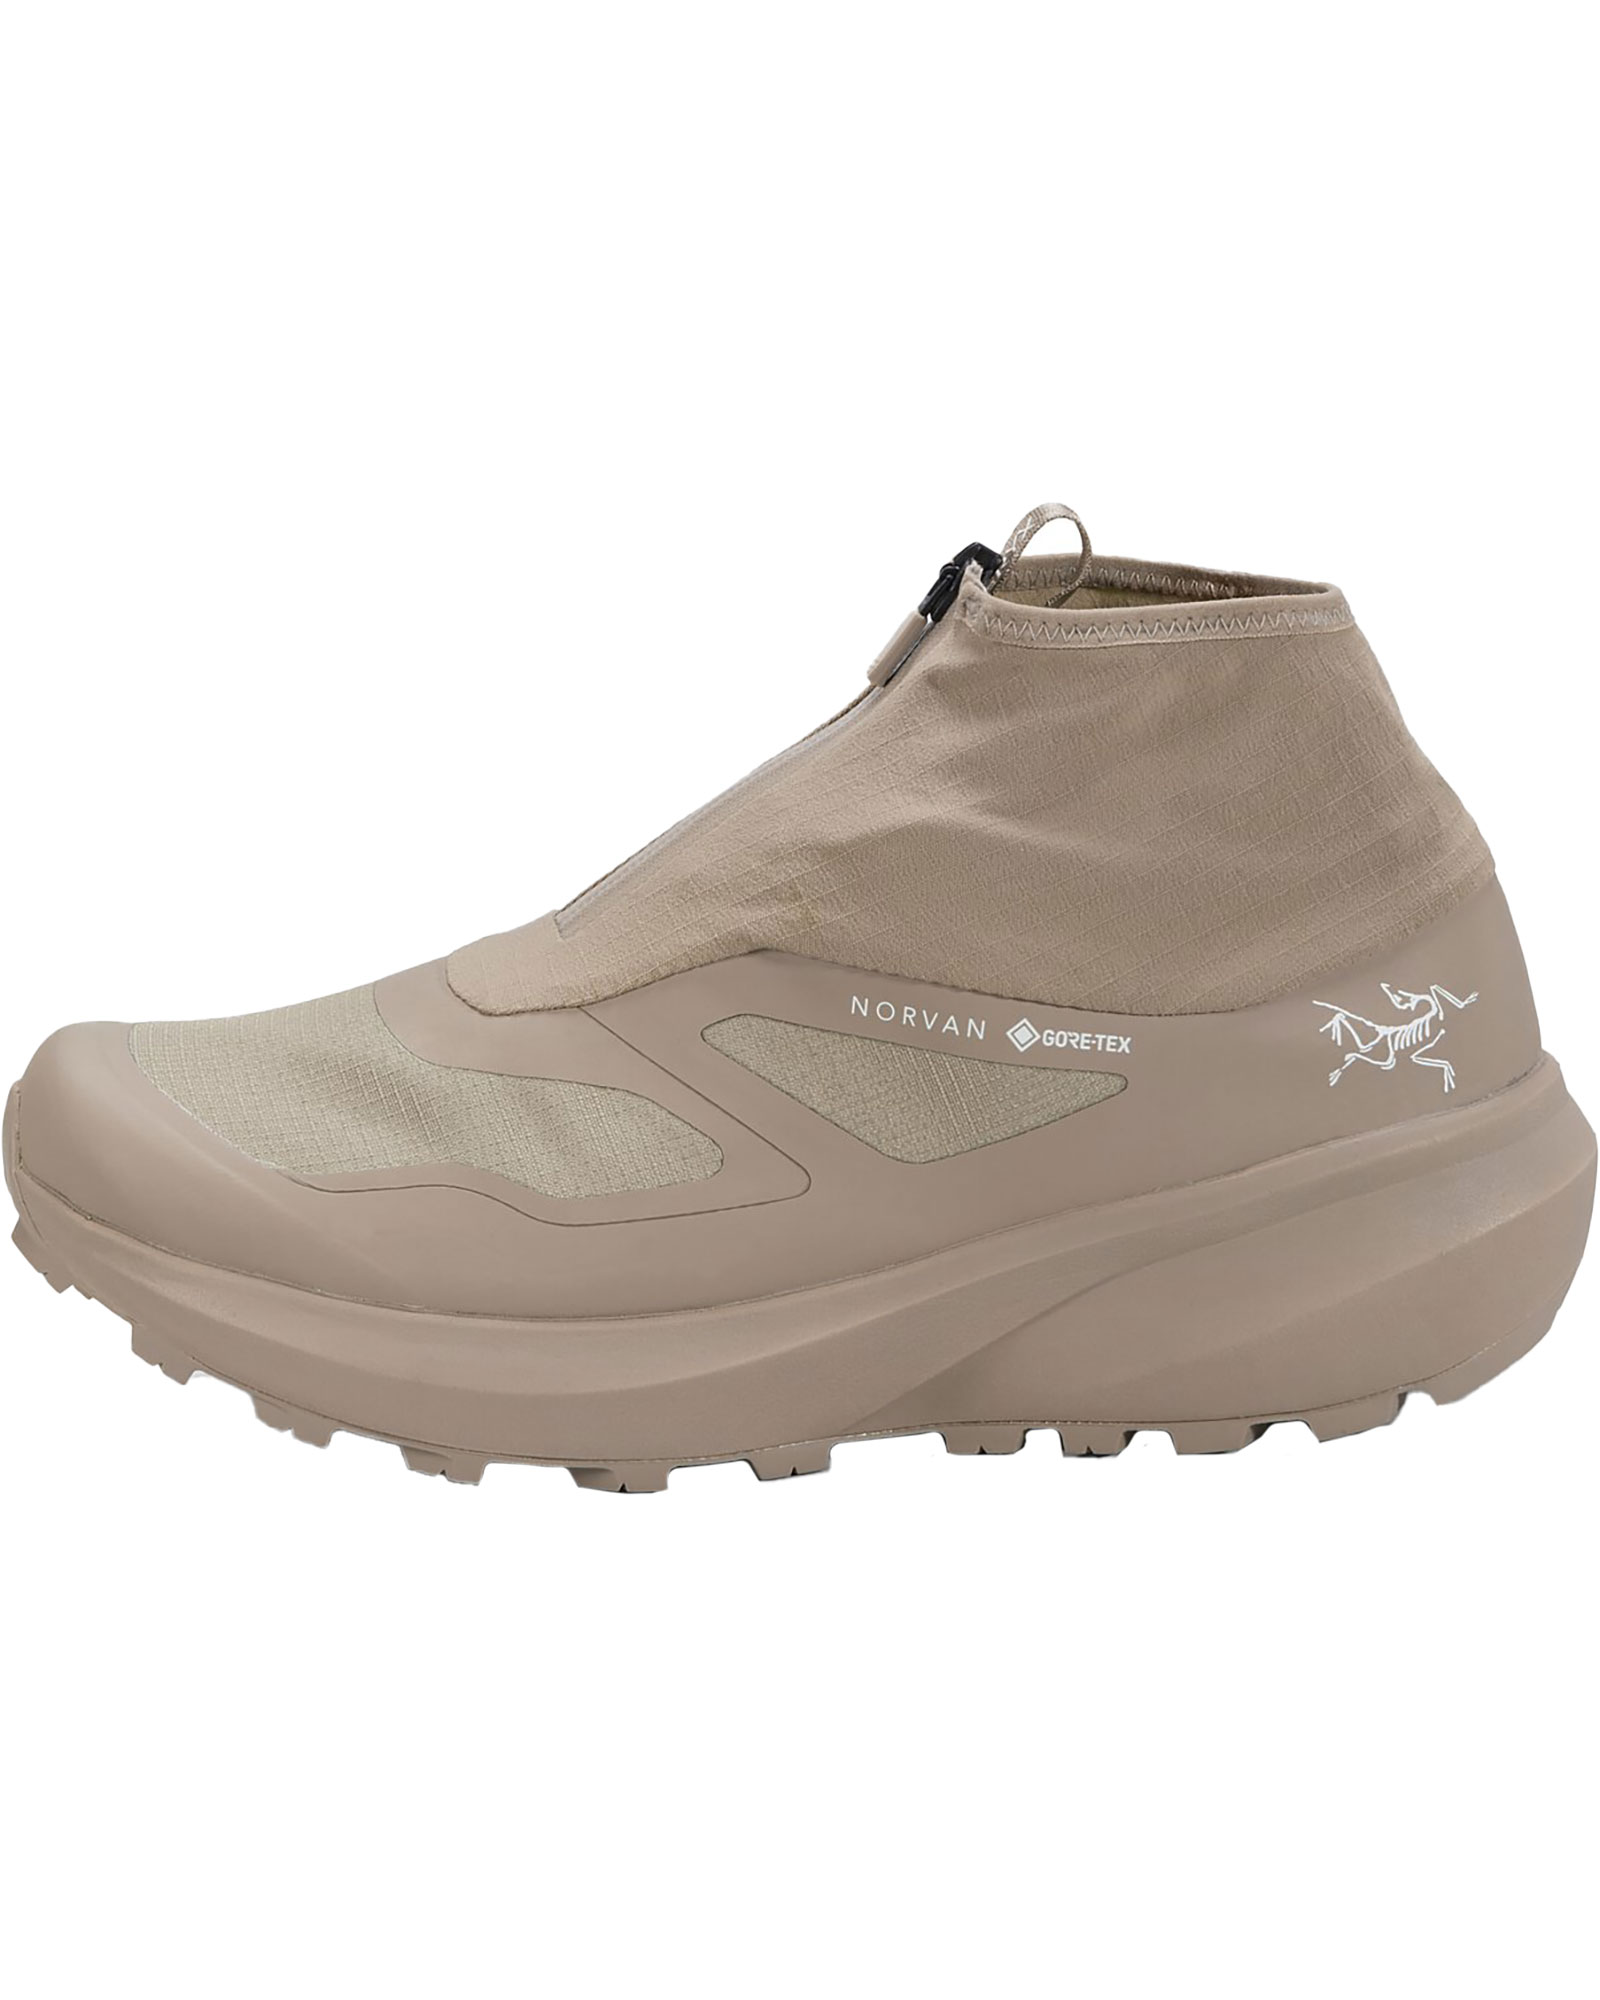 Arc’teryx Norvan Nivalis GORE TEX Trail Shoes - Smoke Bluff/Smoke Bluff UK 8